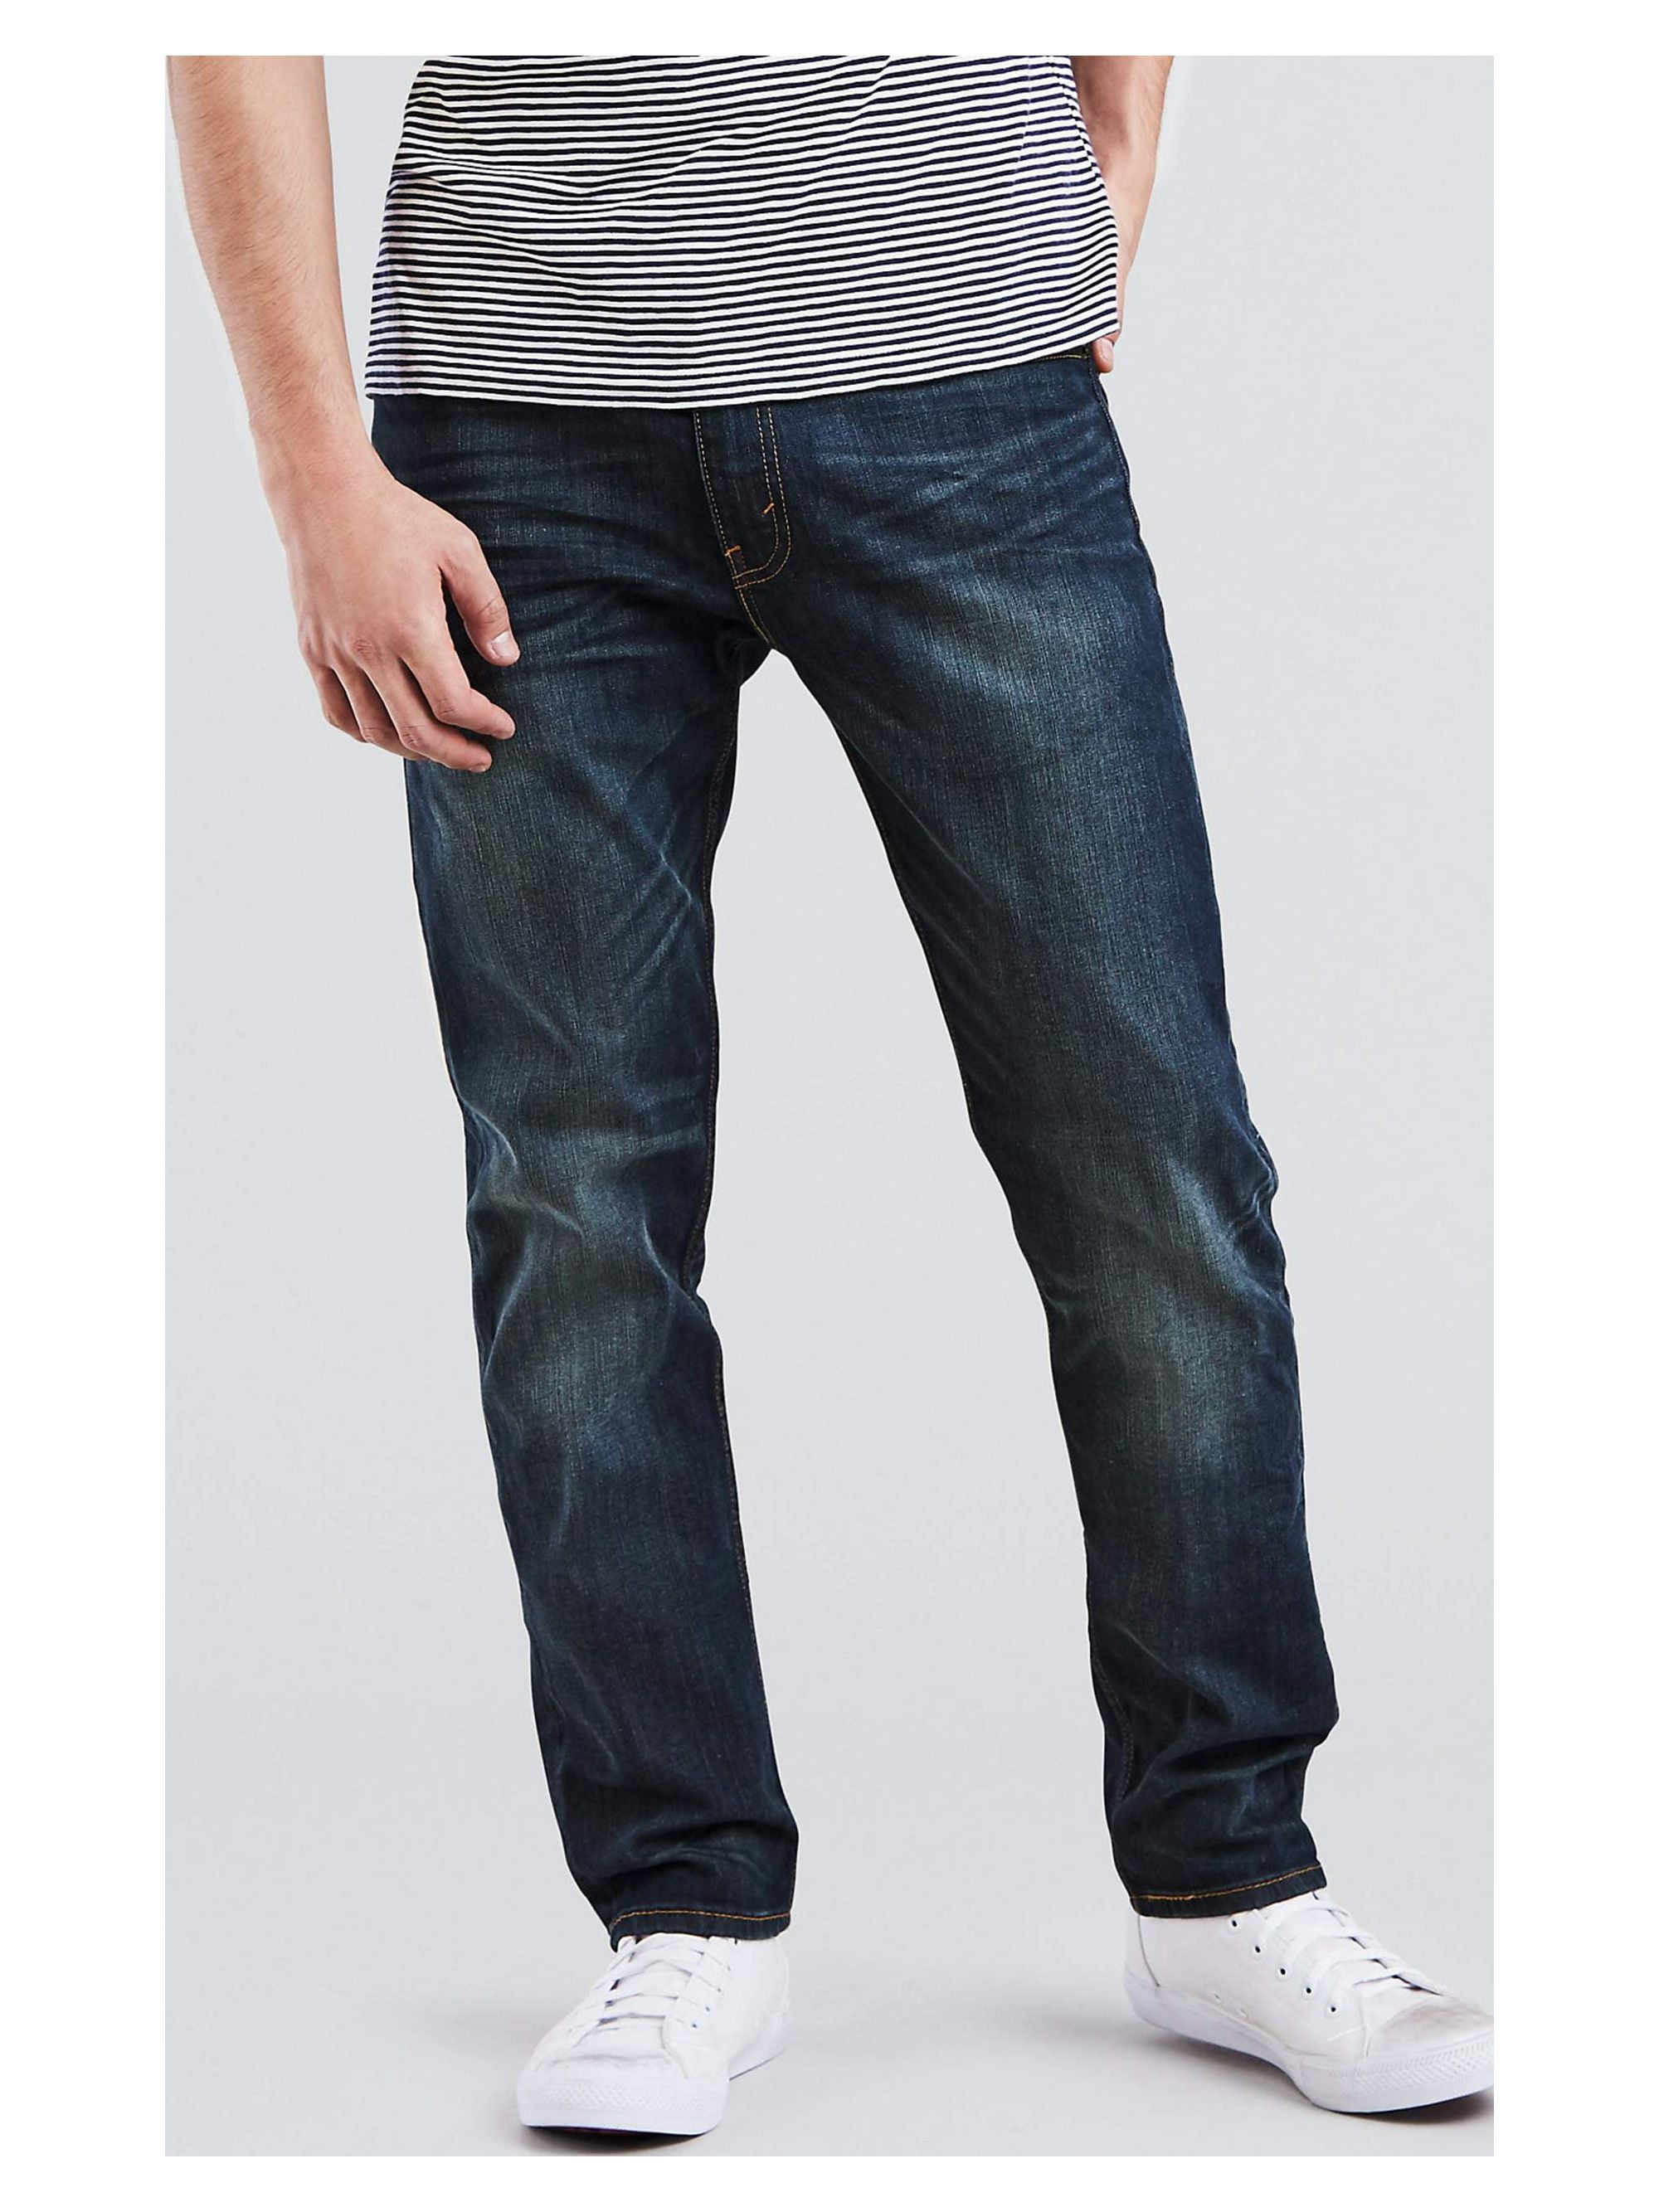 Levi Strauss Mens Original Fit 501 Jeans 28x32 Dark Stonewash